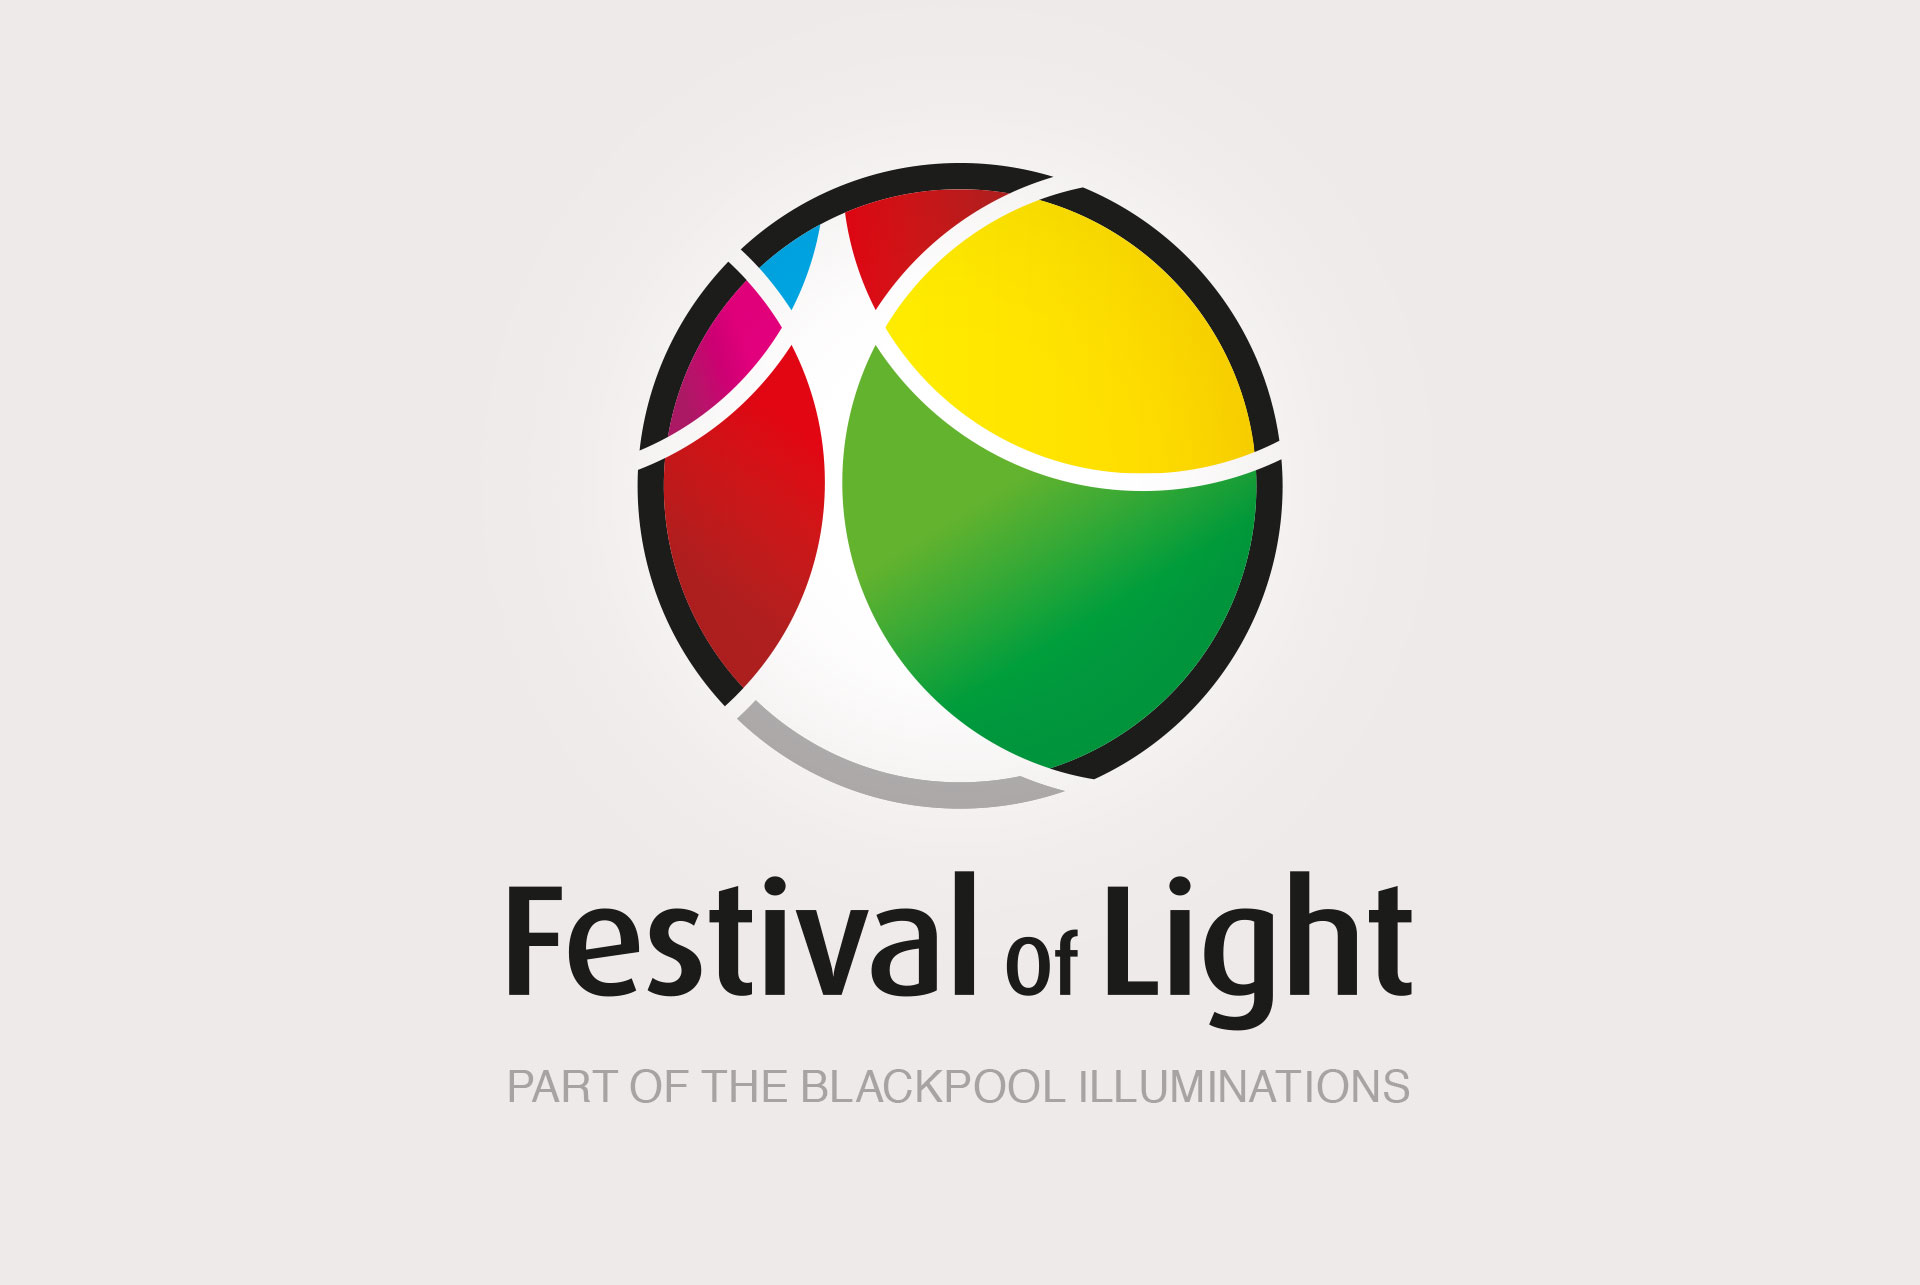 Blackpool light festival